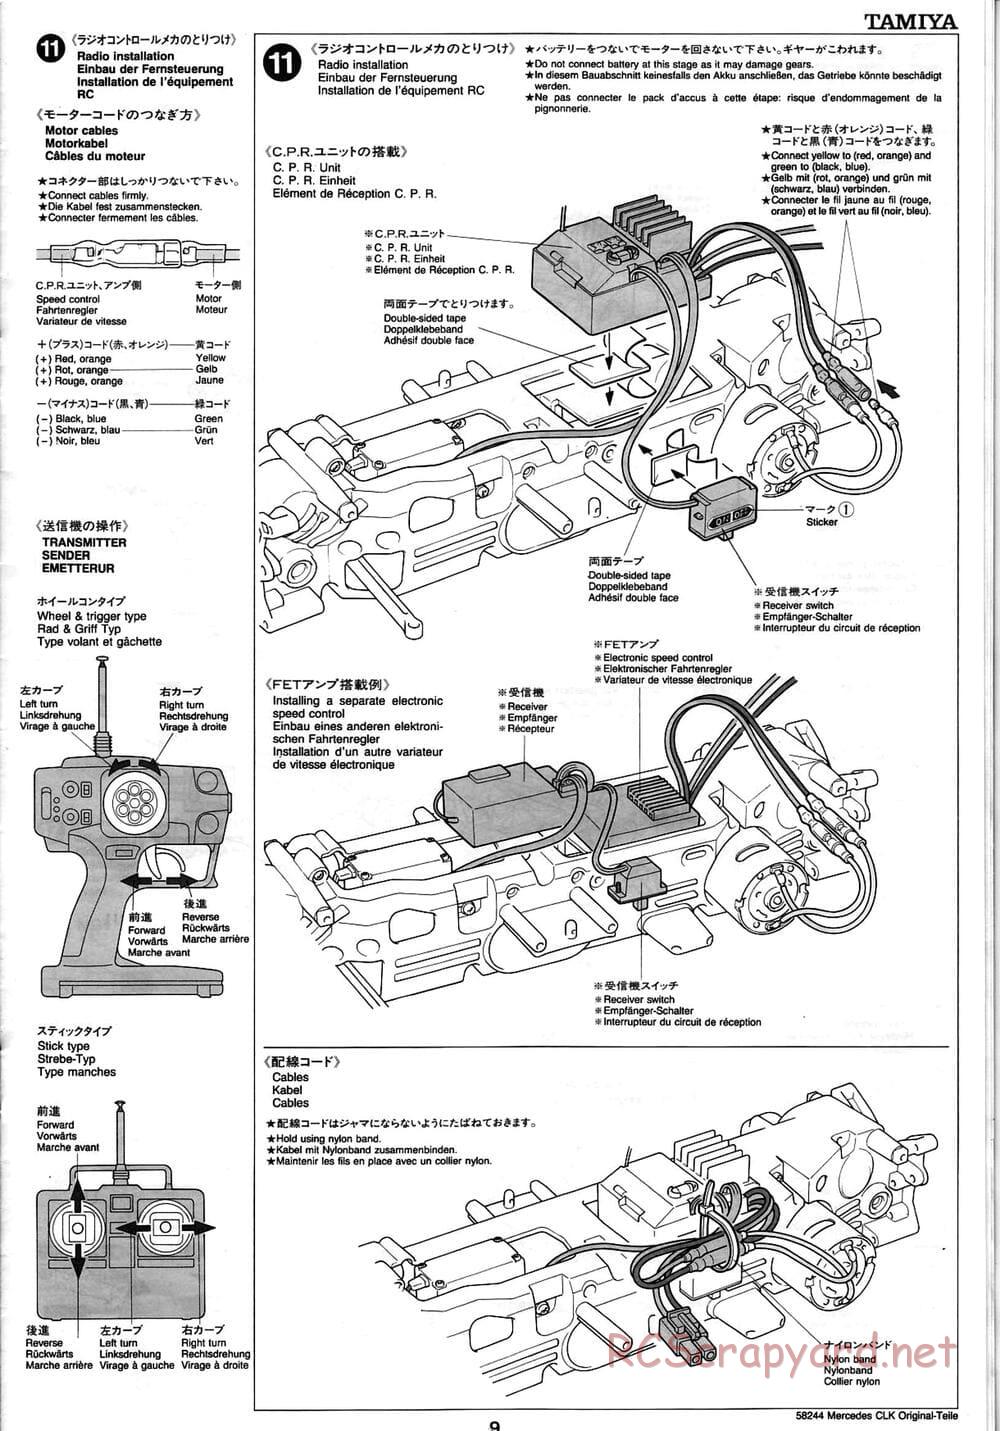 Tamiya - Mercedes CLK-GTR Original-Teile - TL-01 Chassis - Manual - Page 9